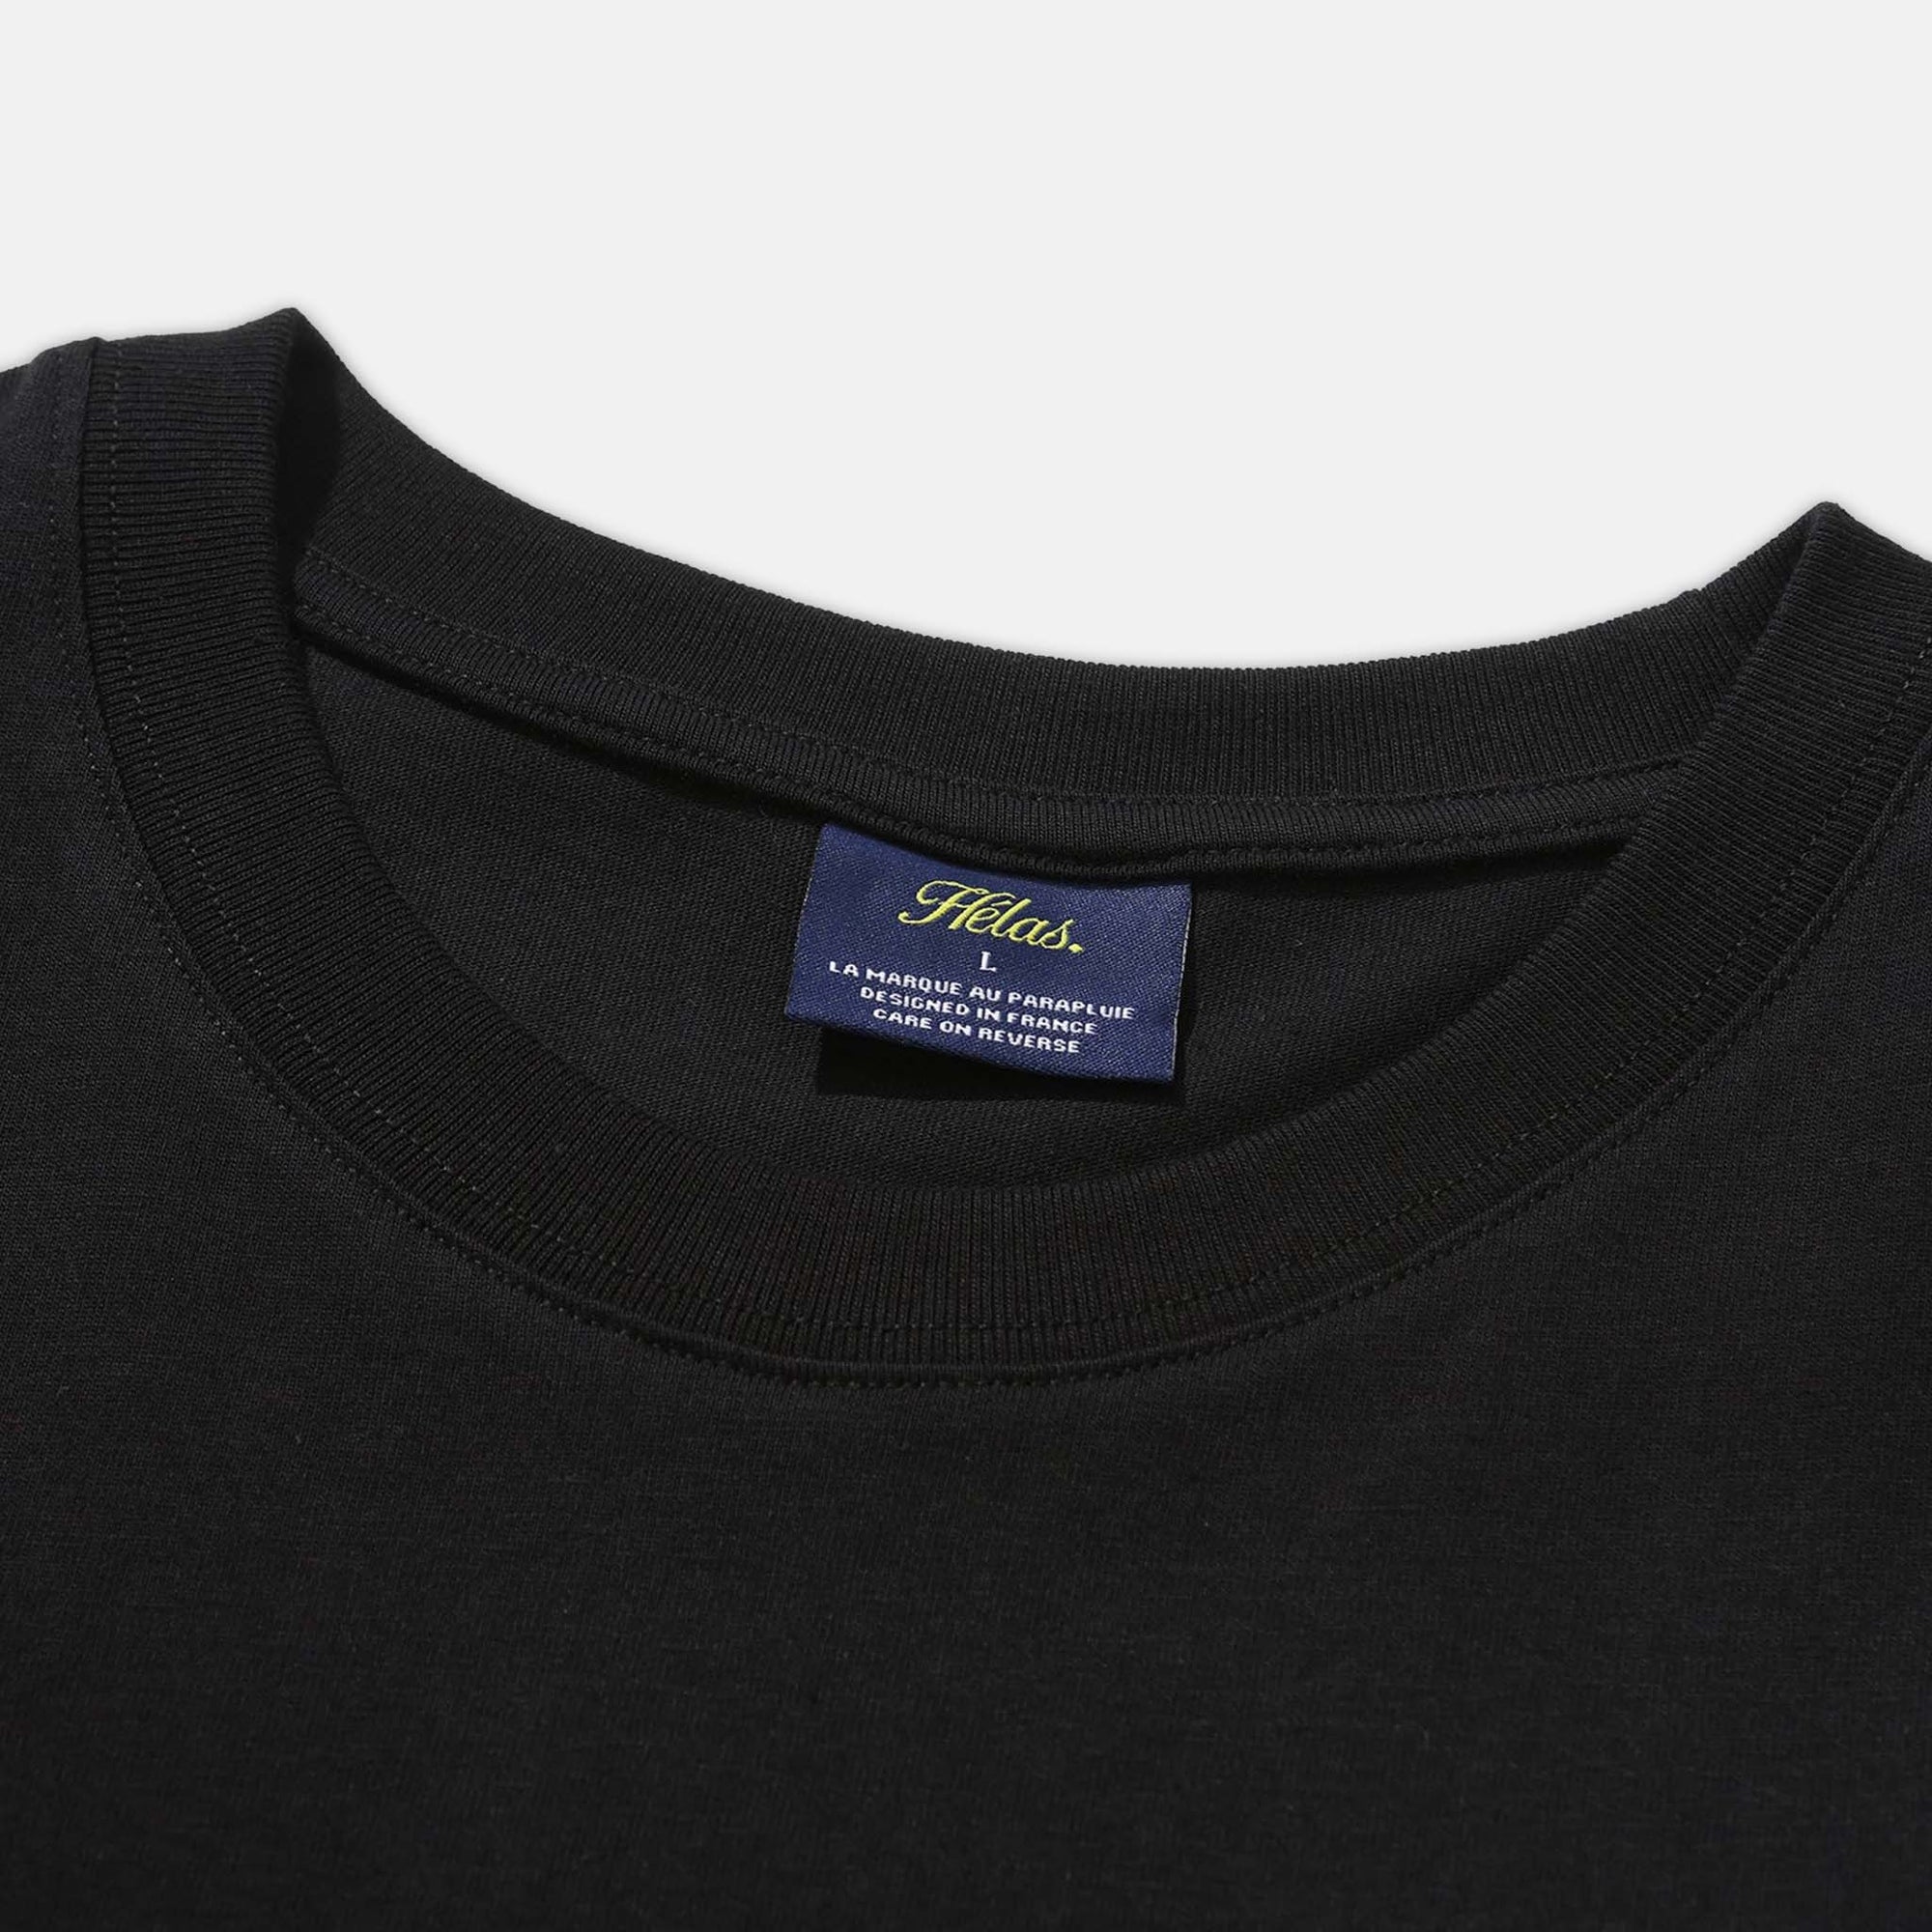 Helas - Liquid T-Shirt - Black